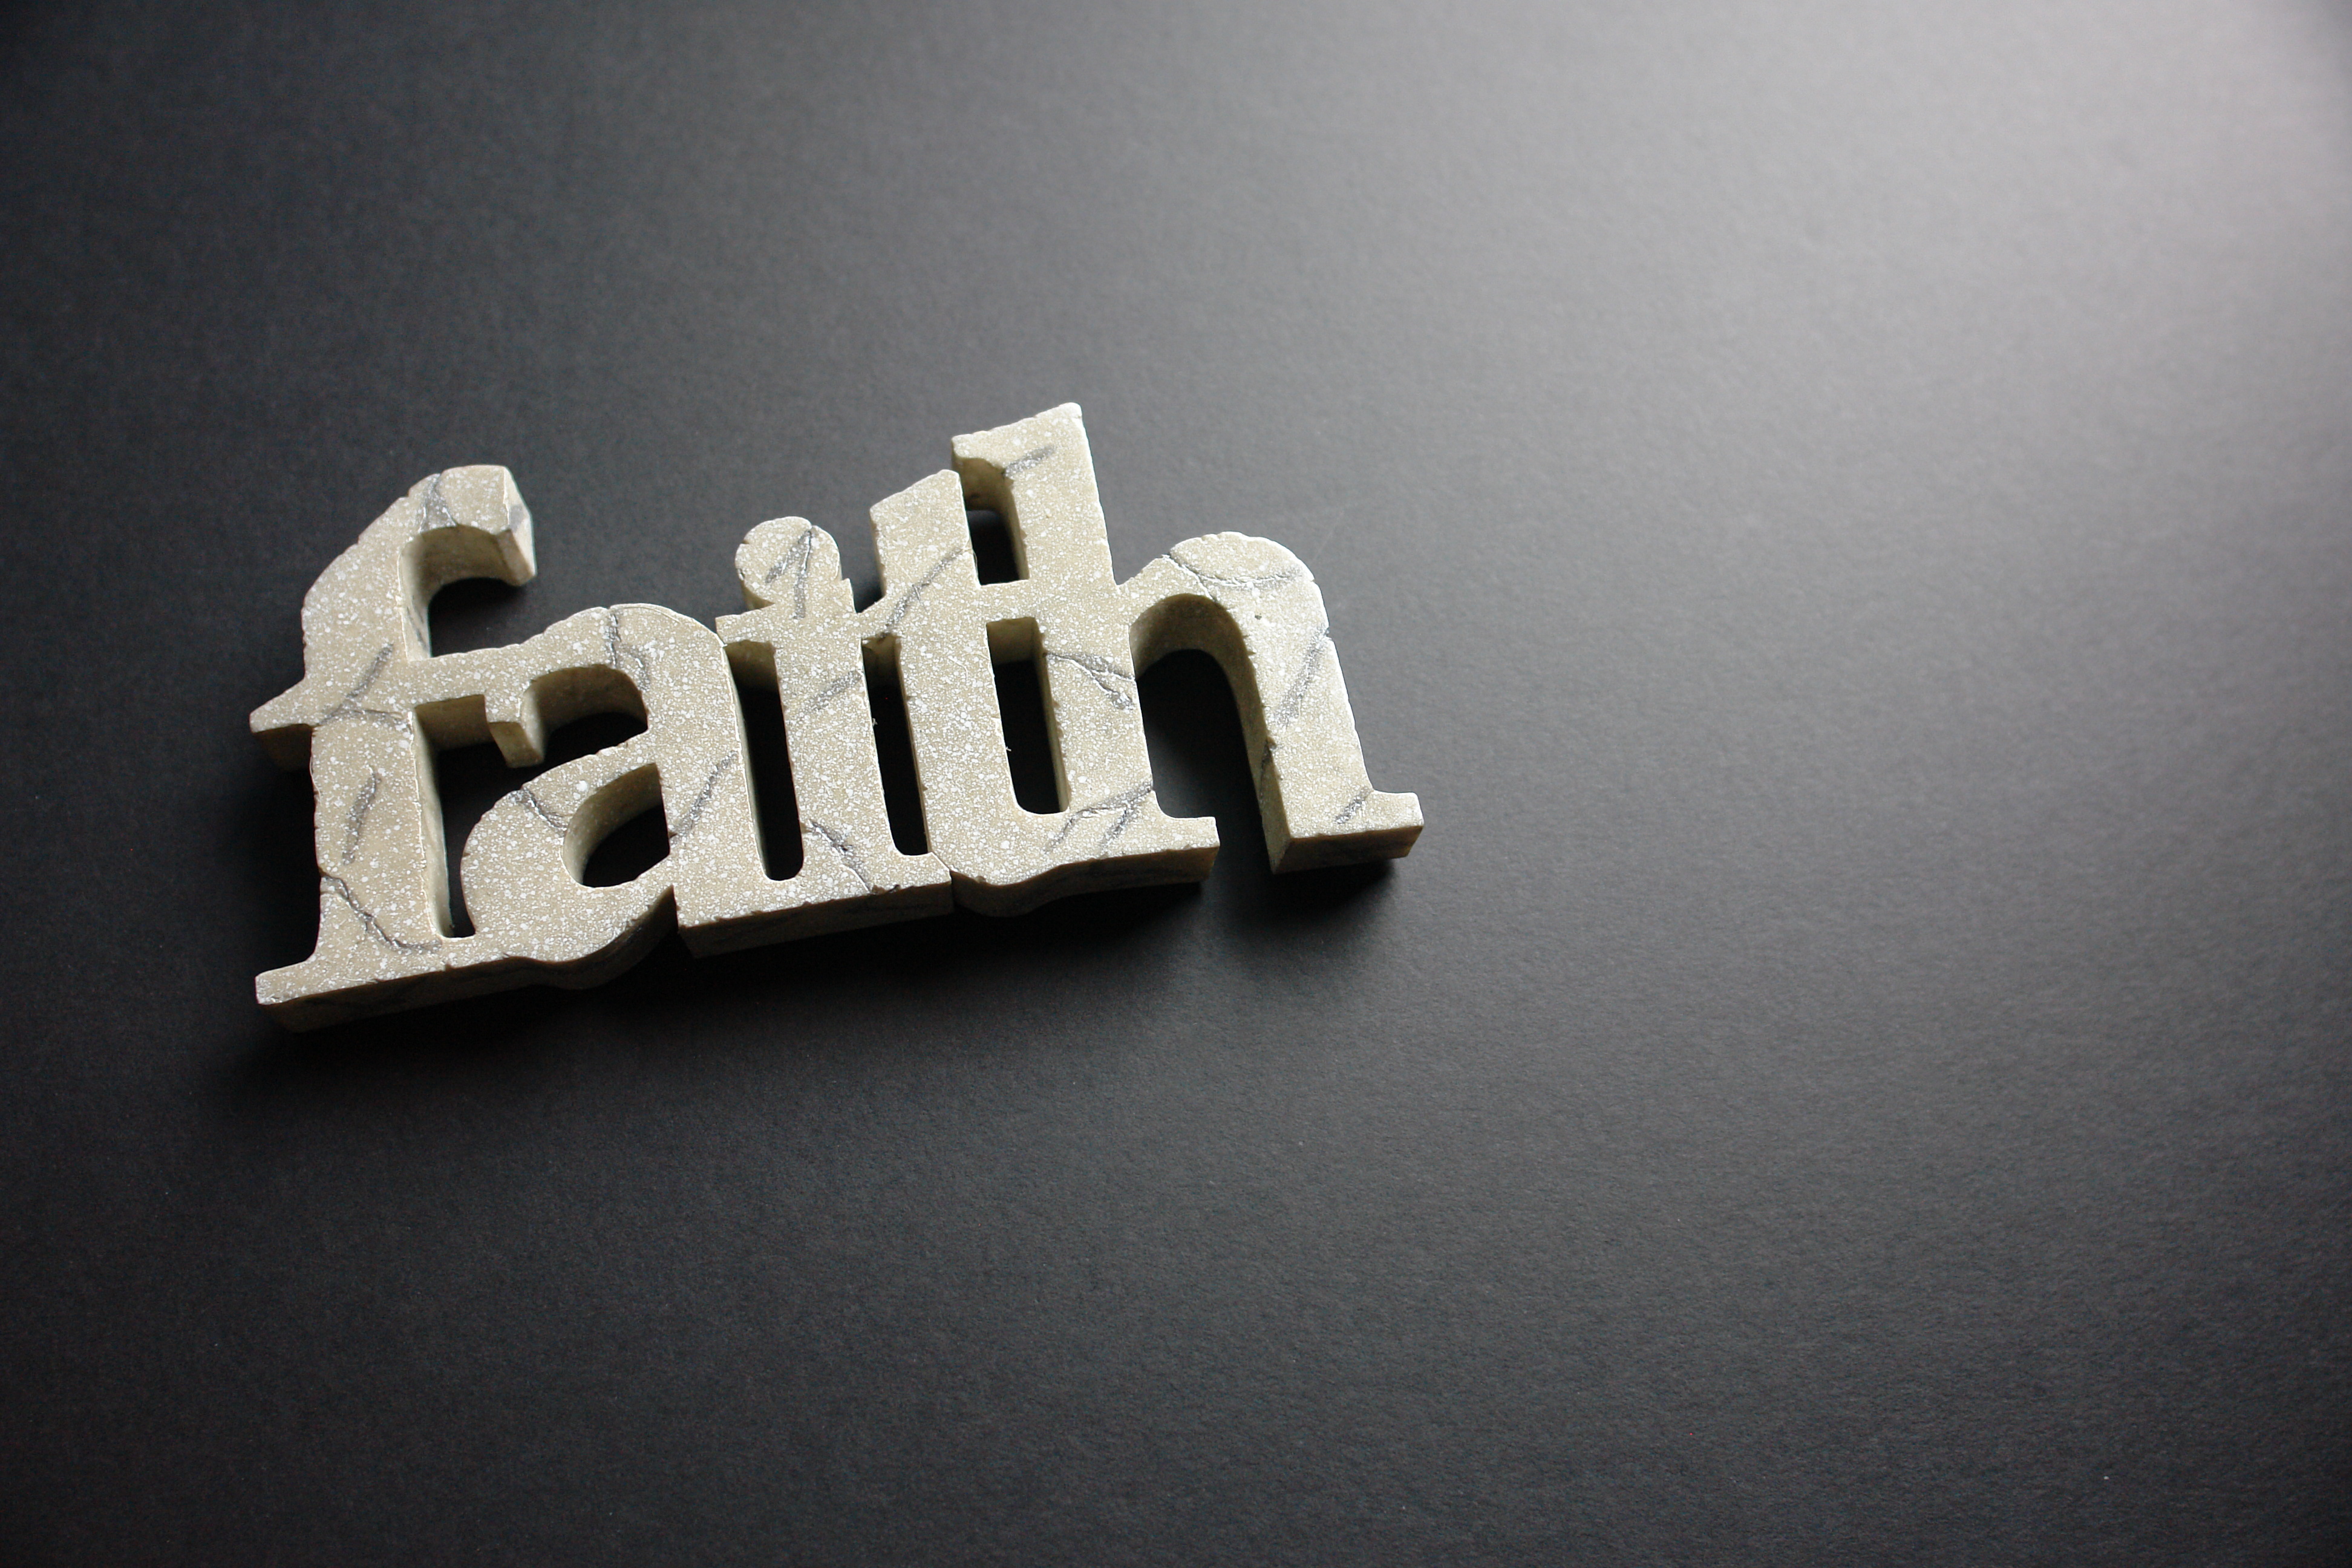 Faith Desktop Wallpapers